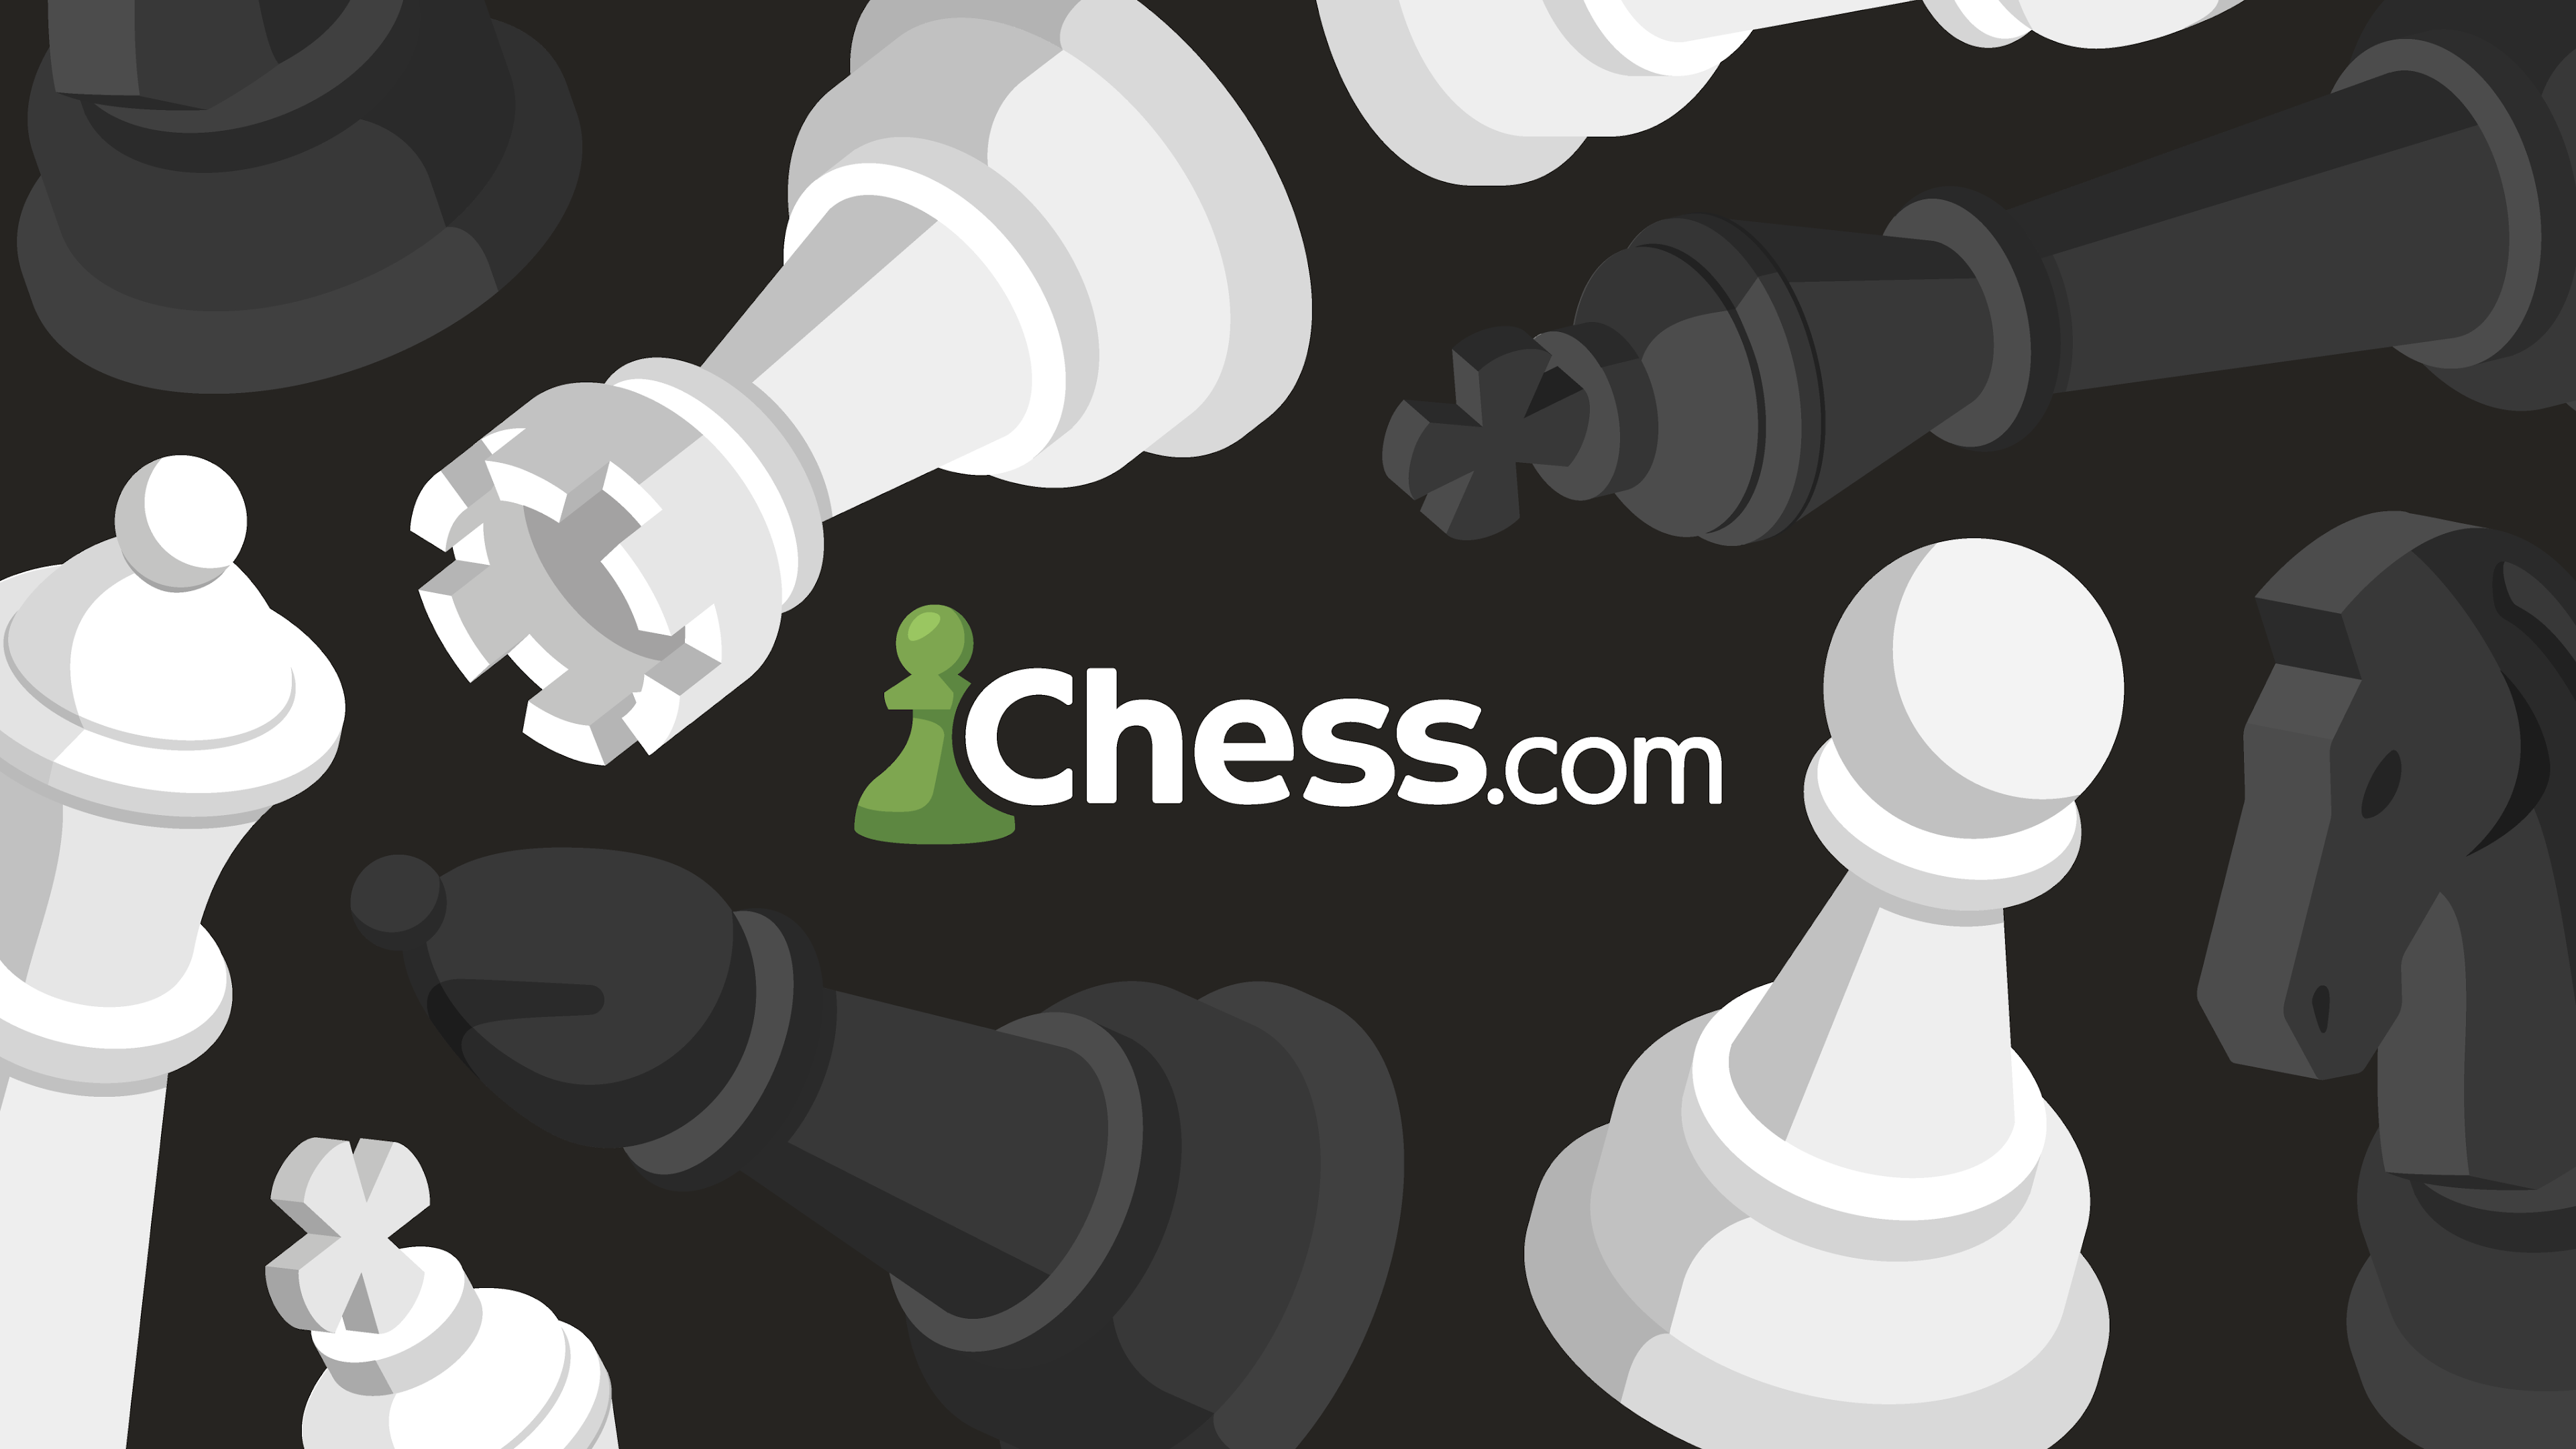 [$ 2.61] Chess.com - 15 Days Diamond Subscription ACCOUNT